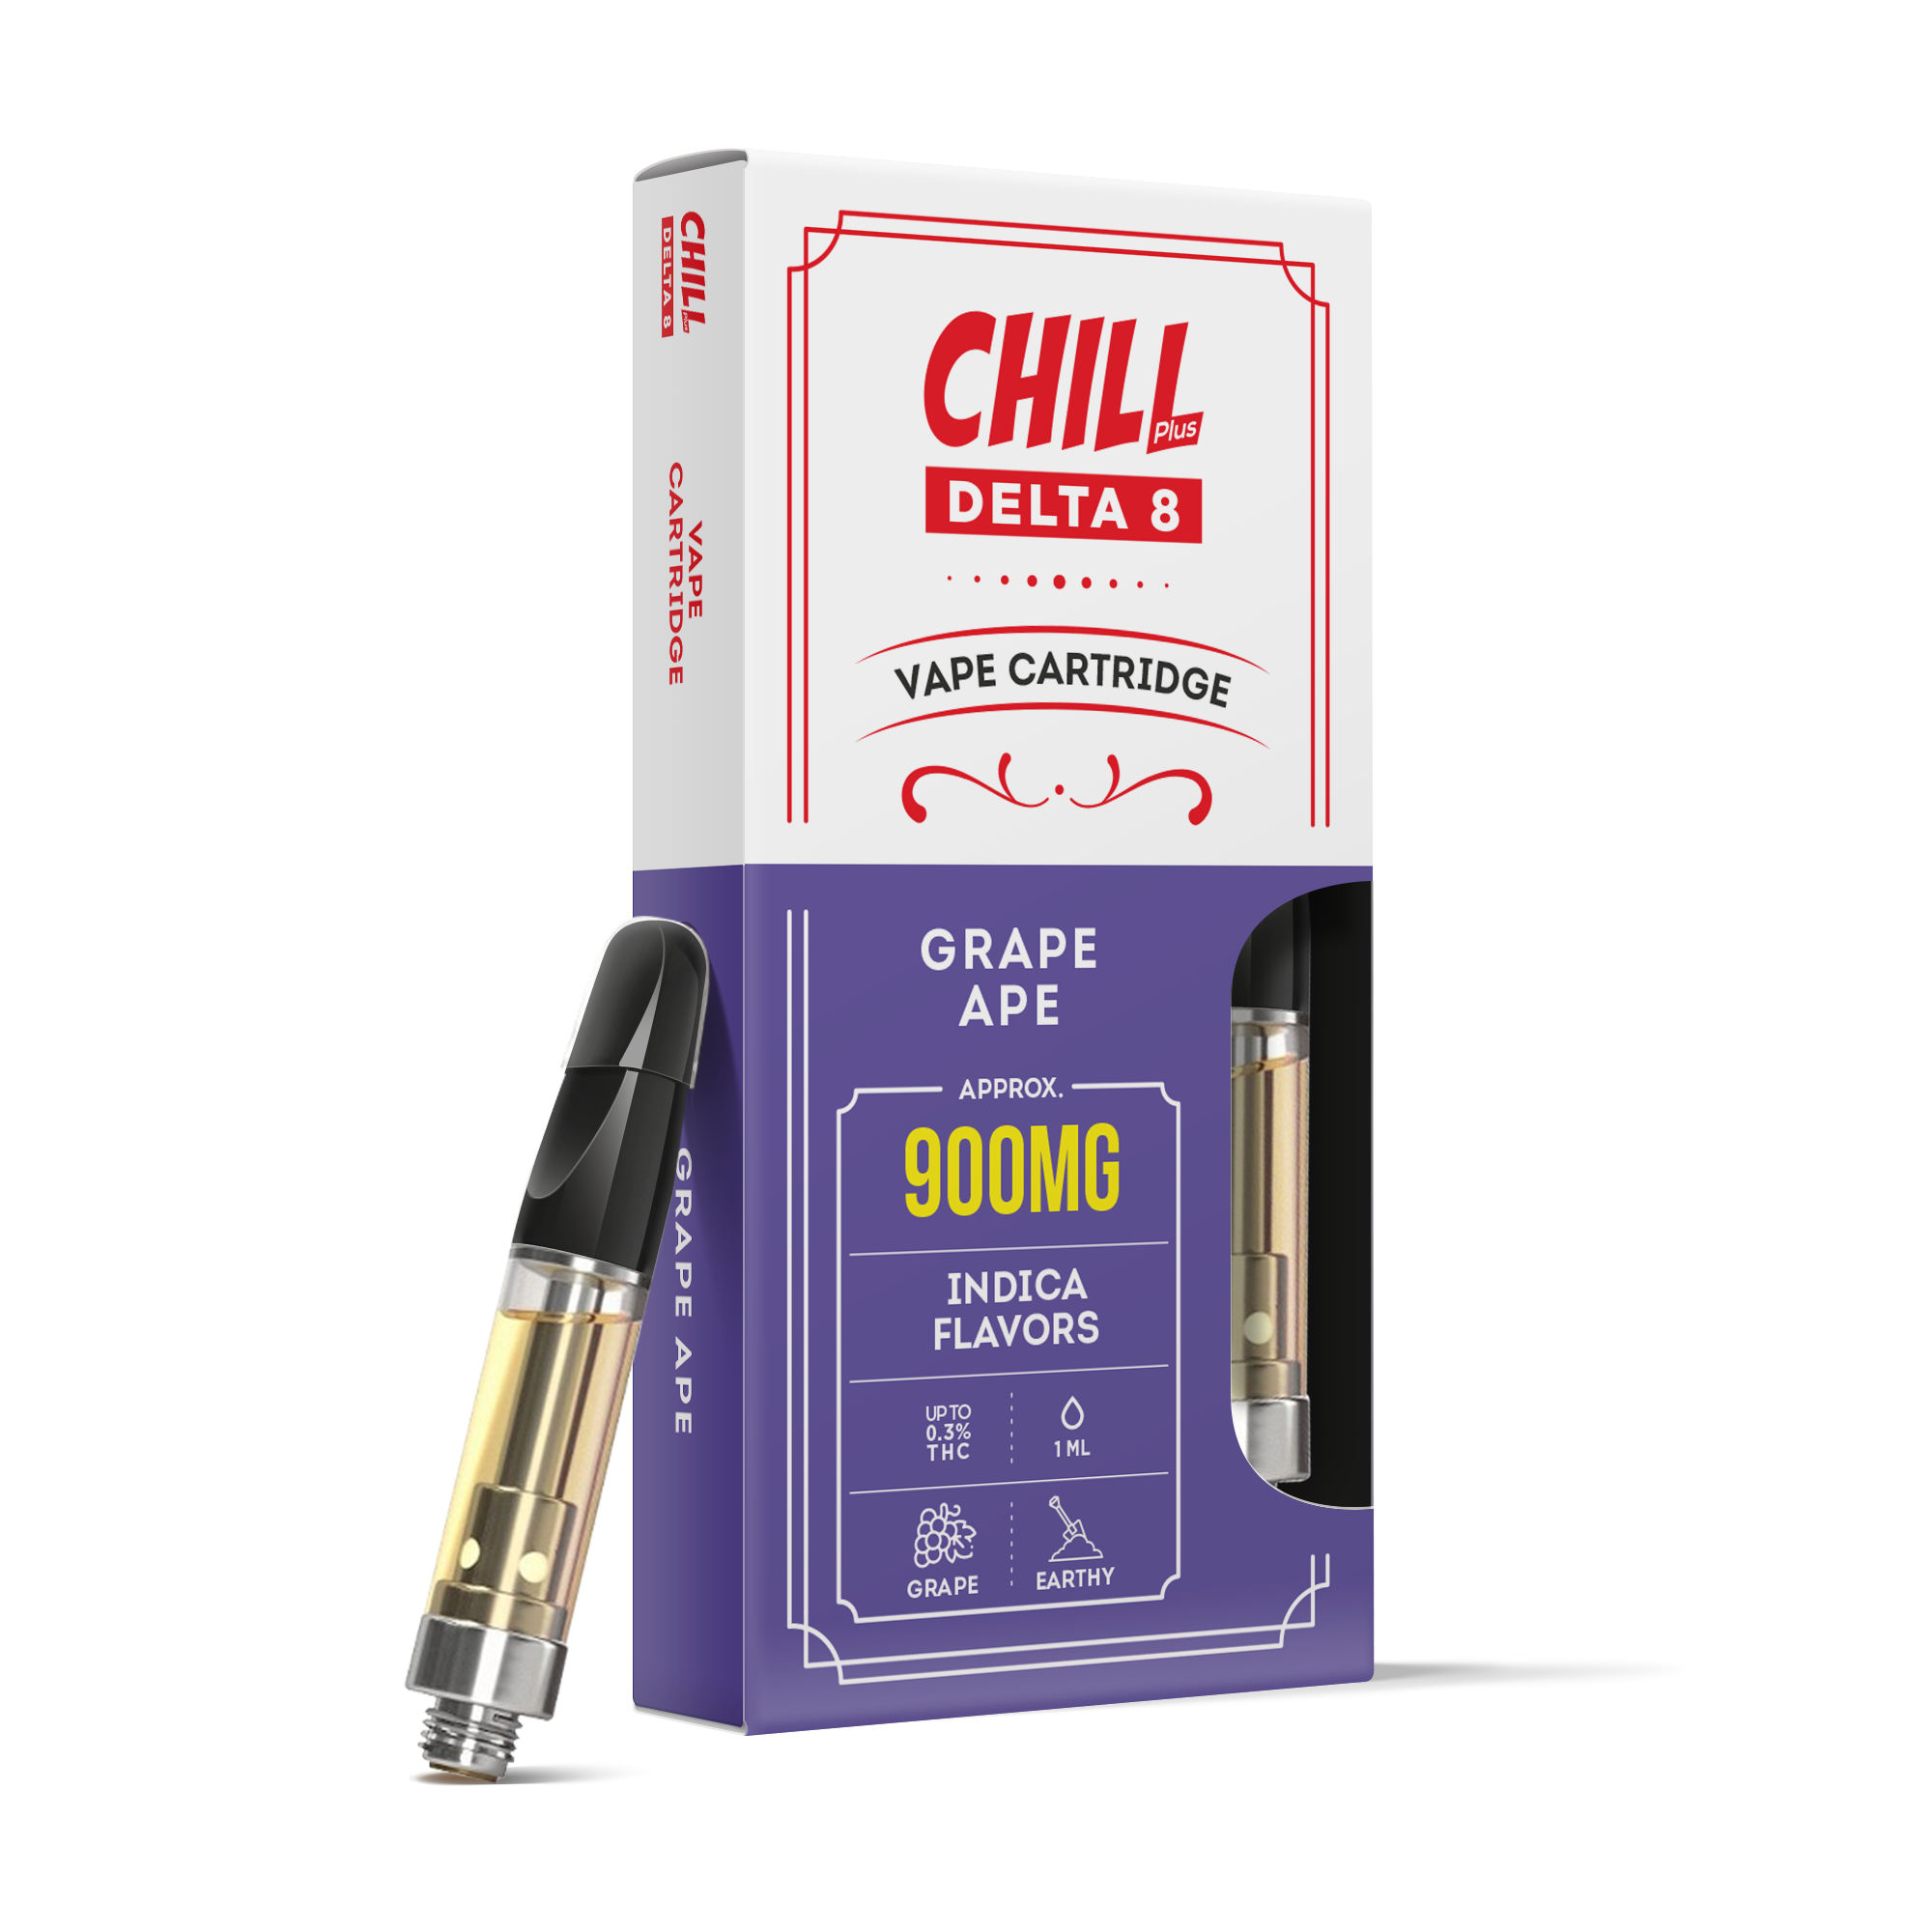 Chill Plus Delta-8 Vape Cartridge - Grape Ape - 900mg (1ml)